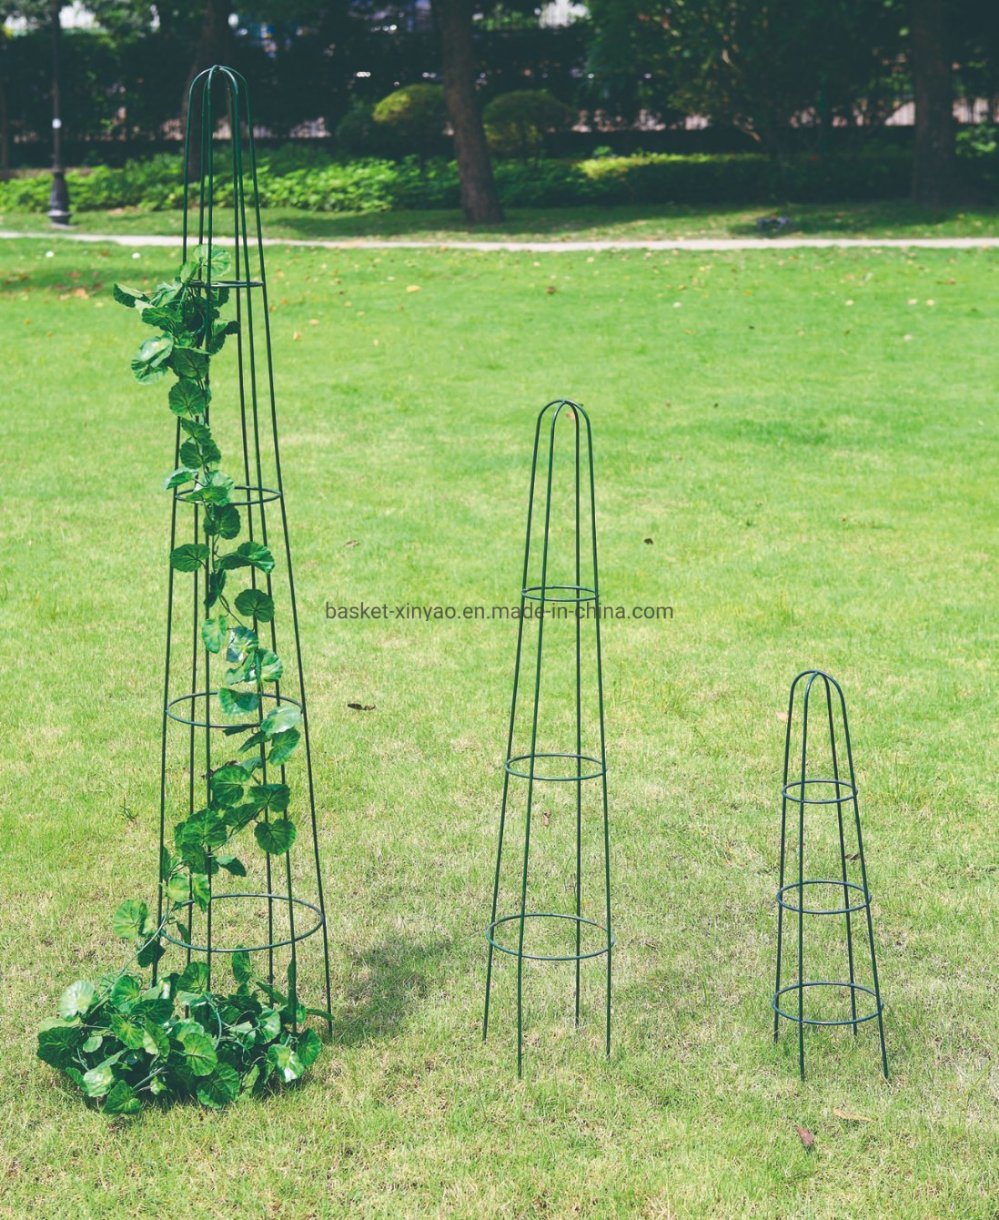 Tomato Cage Iron Flower Pot Trellis Plant Support Garden Obelisk (BS090033)